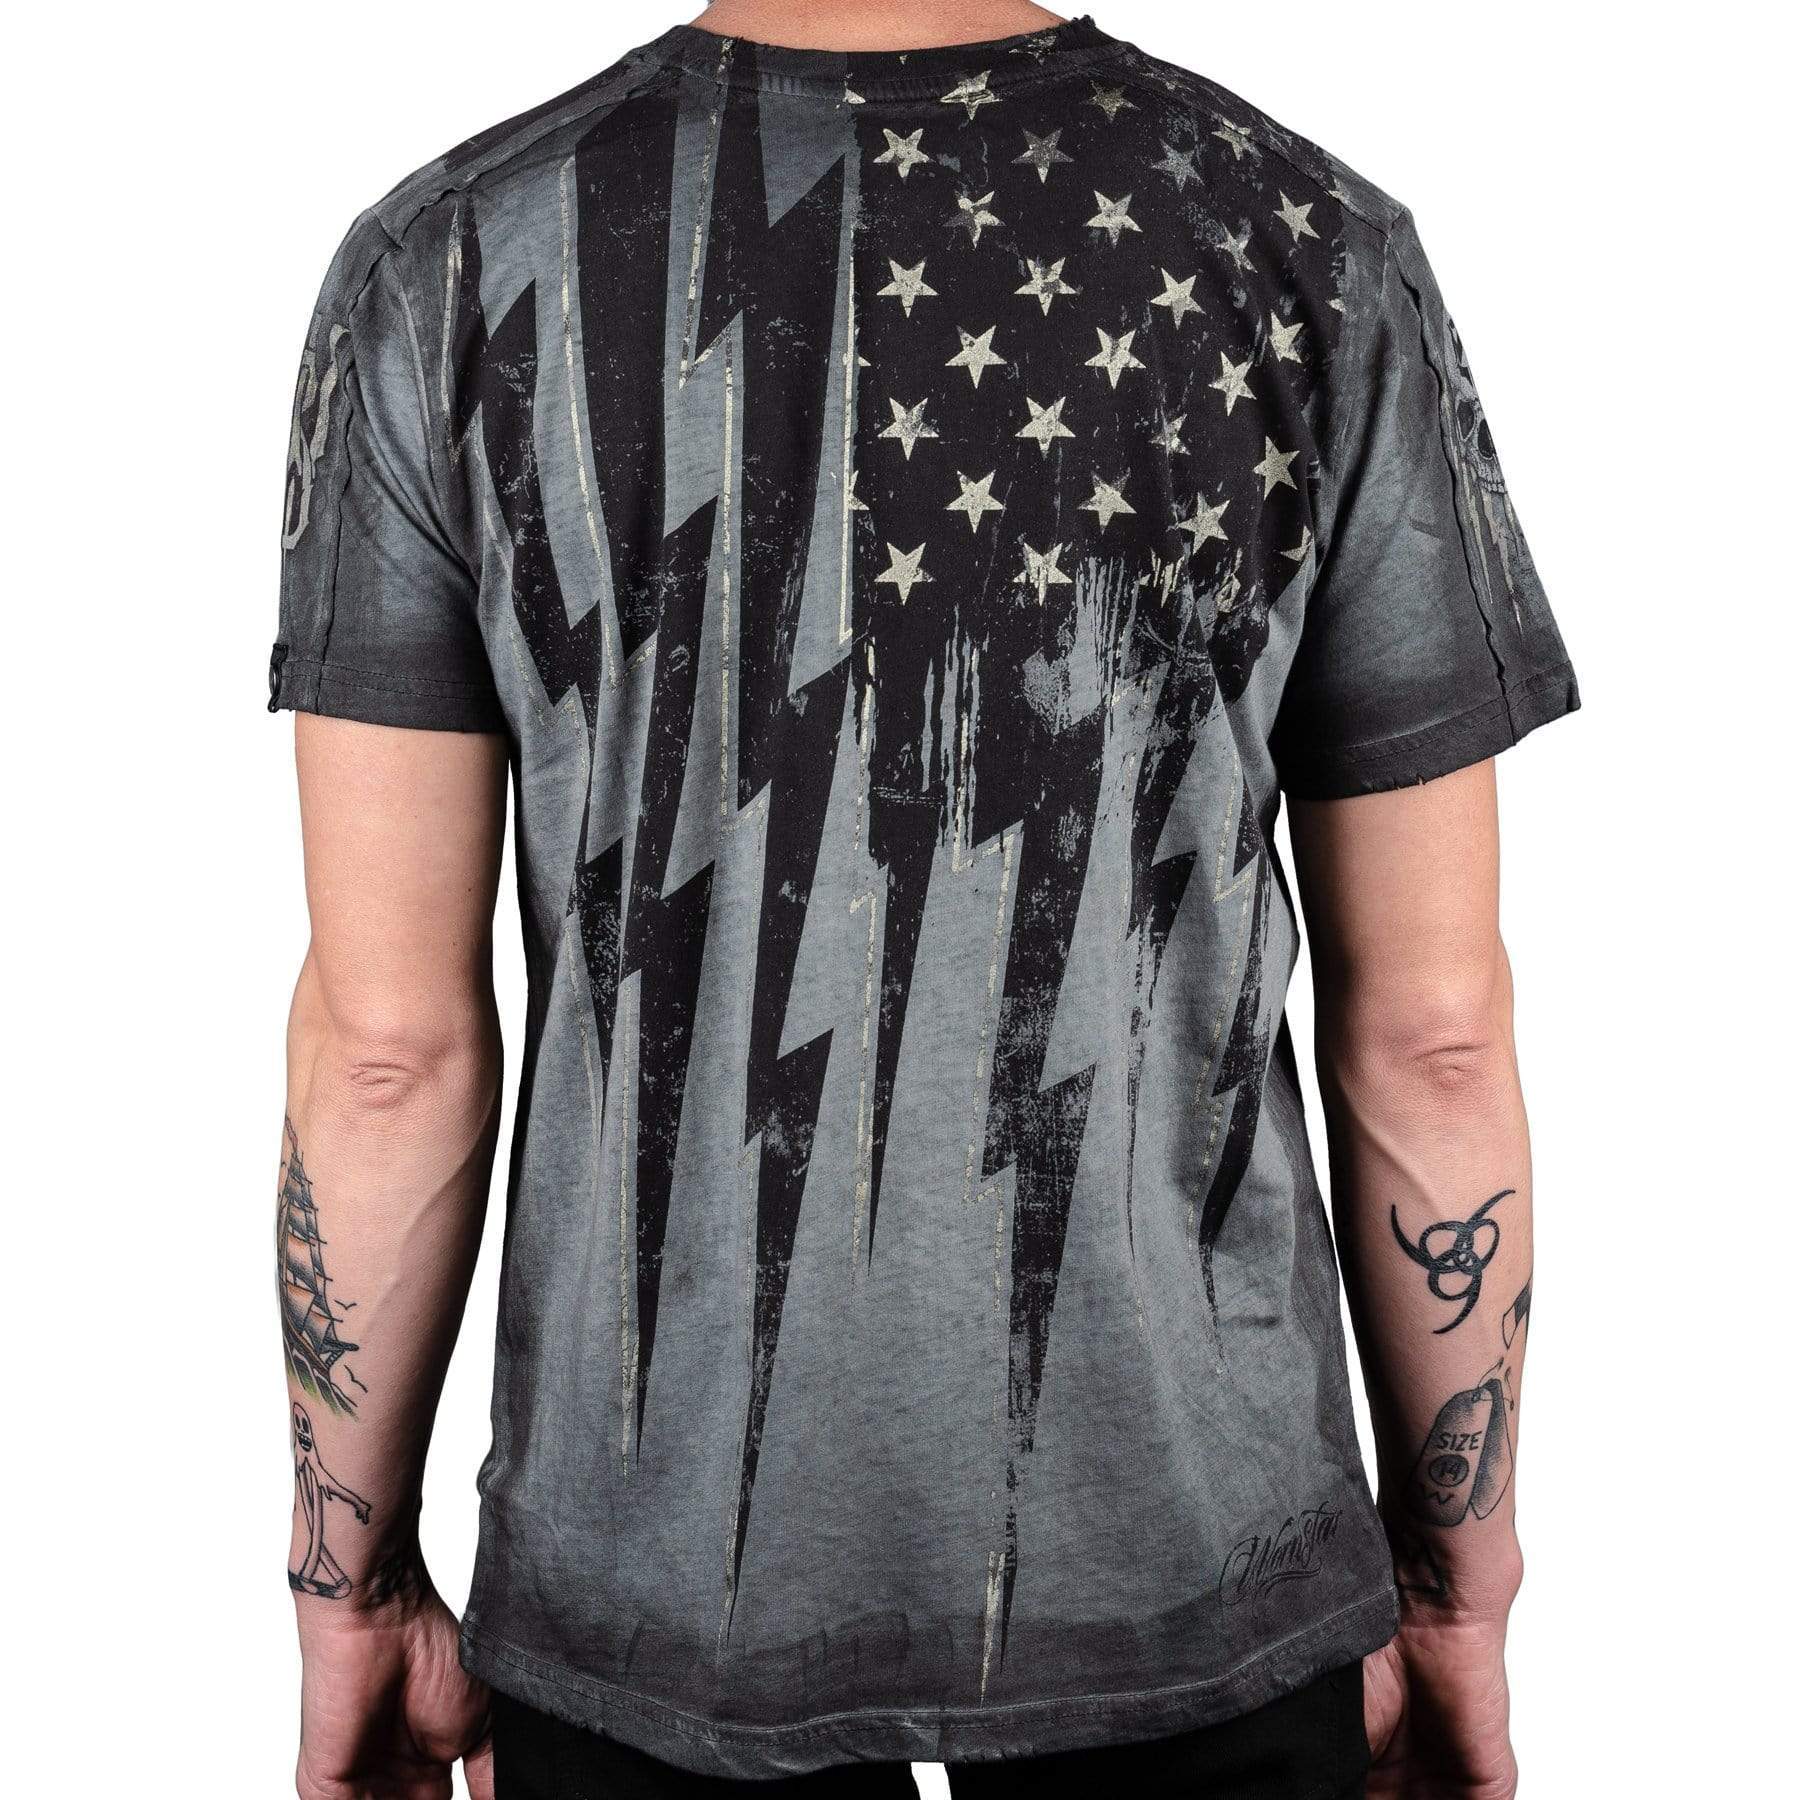 Artist Asylum Collection T-Shirt Black Flag Tee